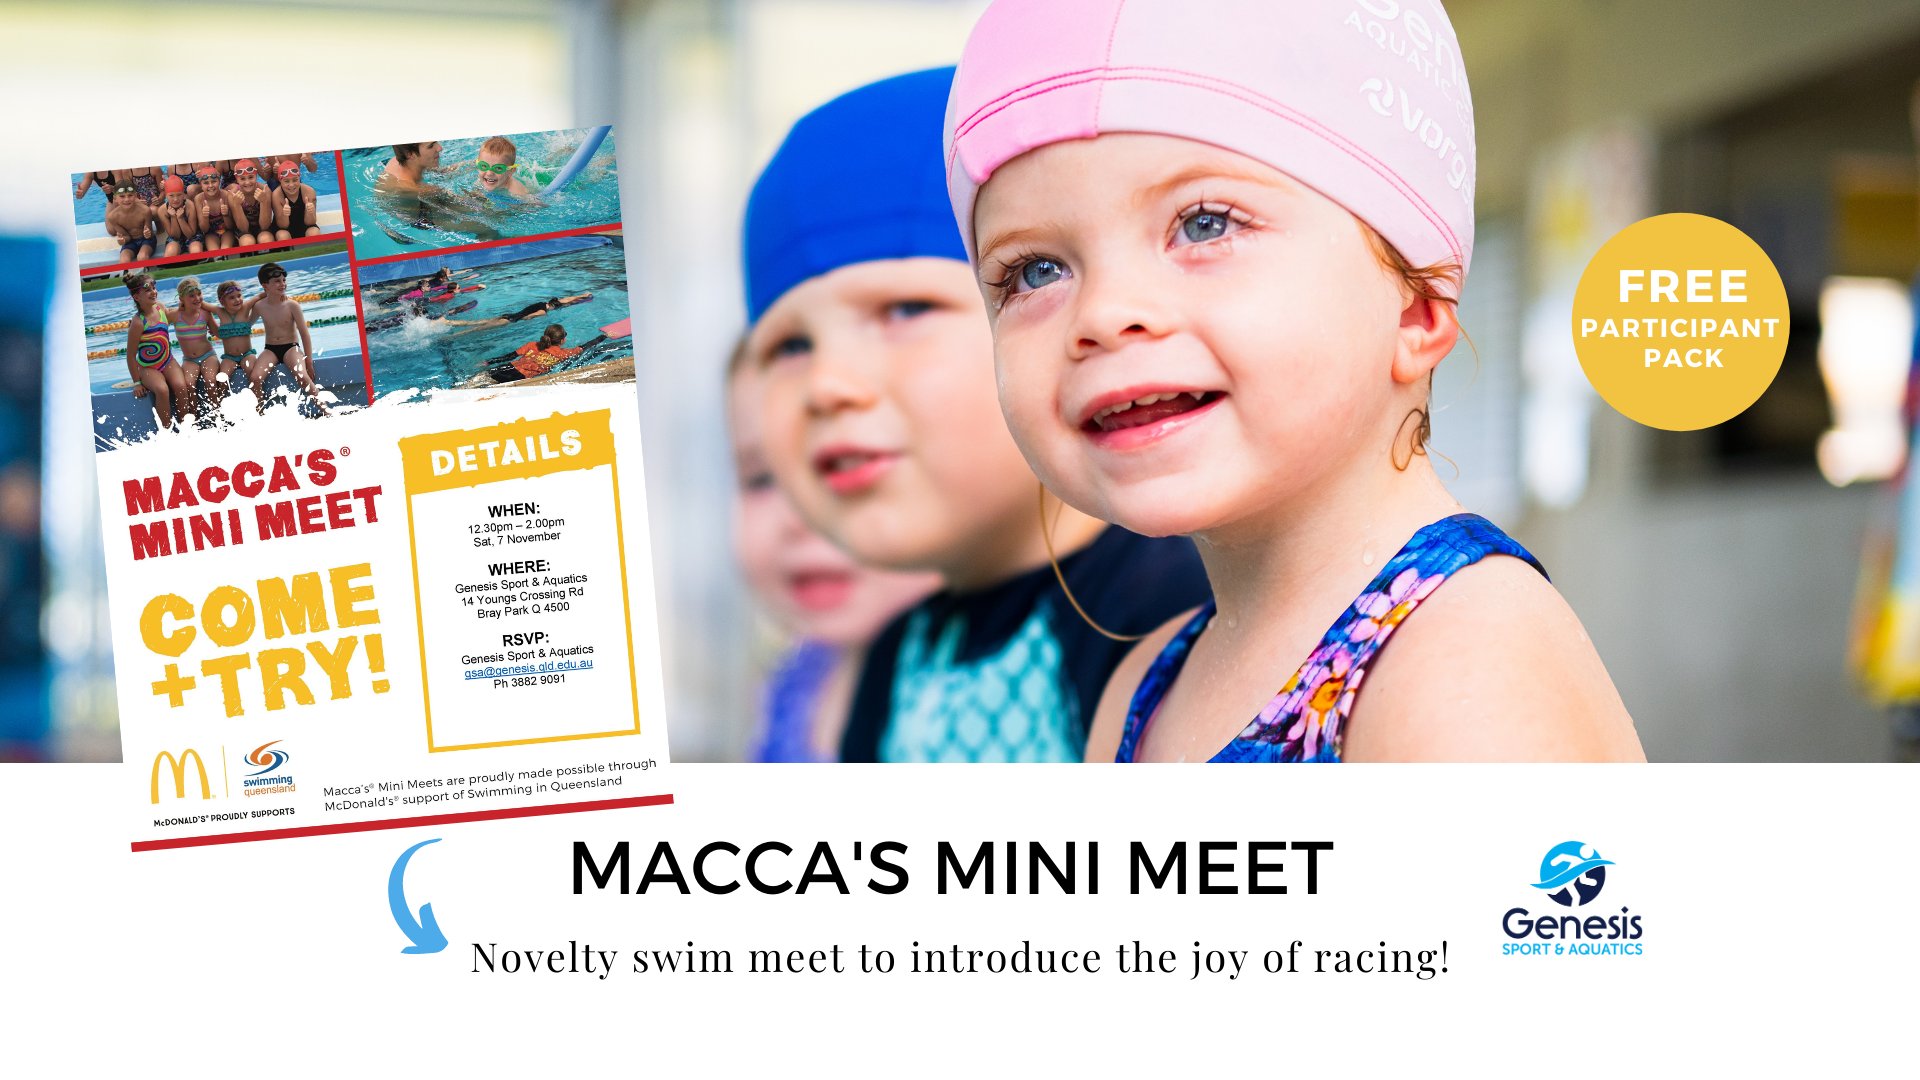 Genesis Sport and Aquatics Maccas Mini Meet